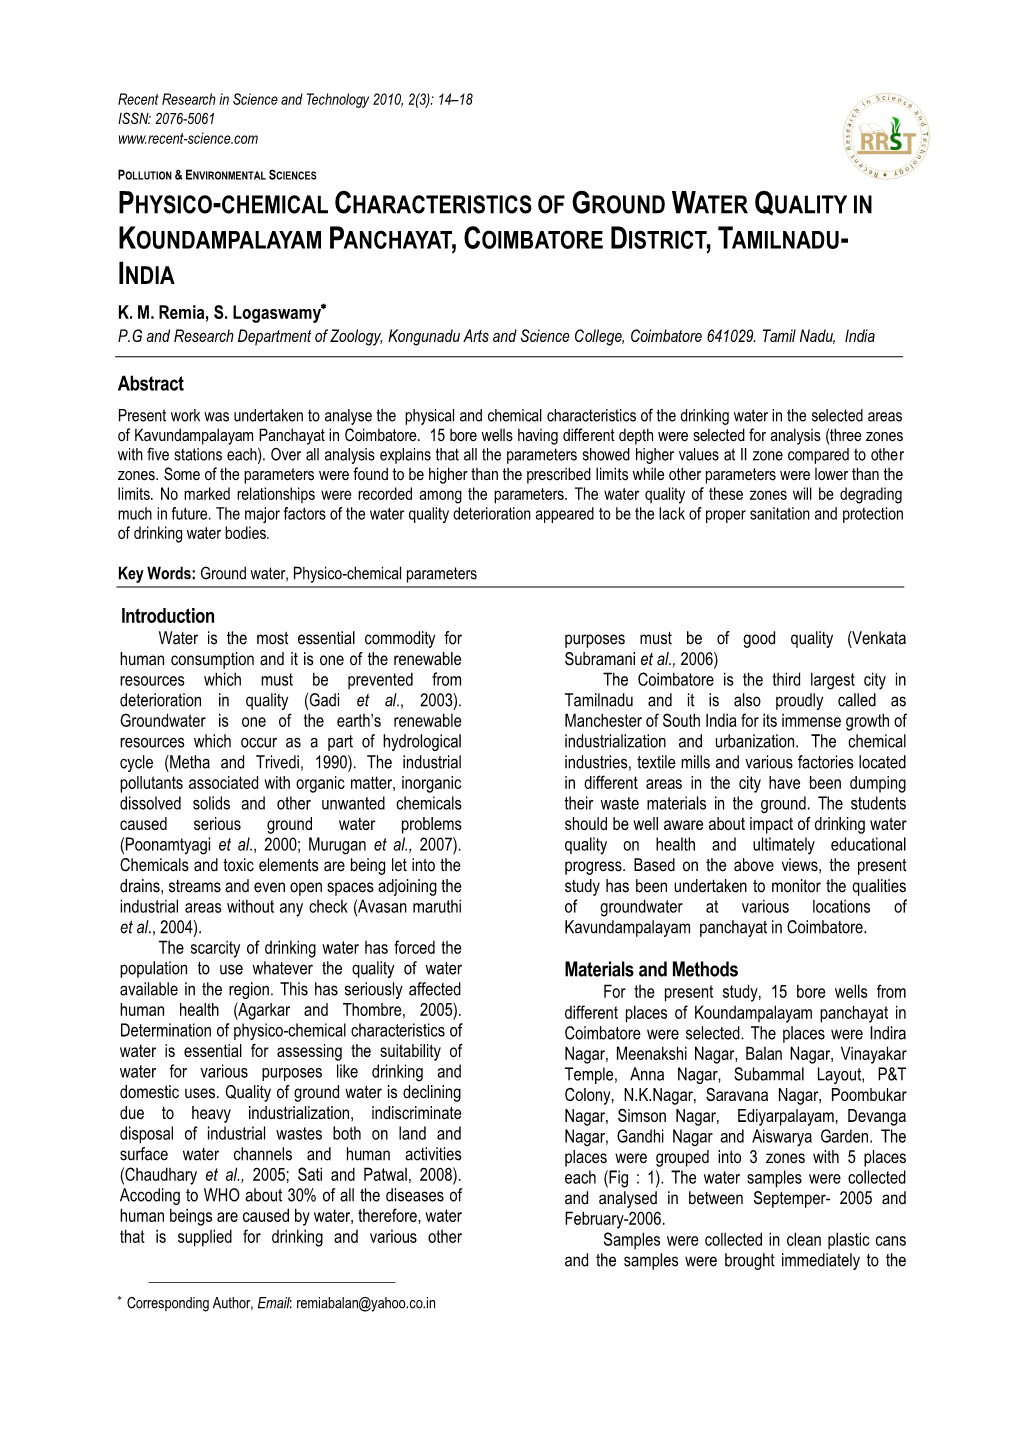 Physico-Chemical Characteristics of Ground Water Quality in Koundampalayam Panchayat, Coimbatore District, Tamilnadu- India K